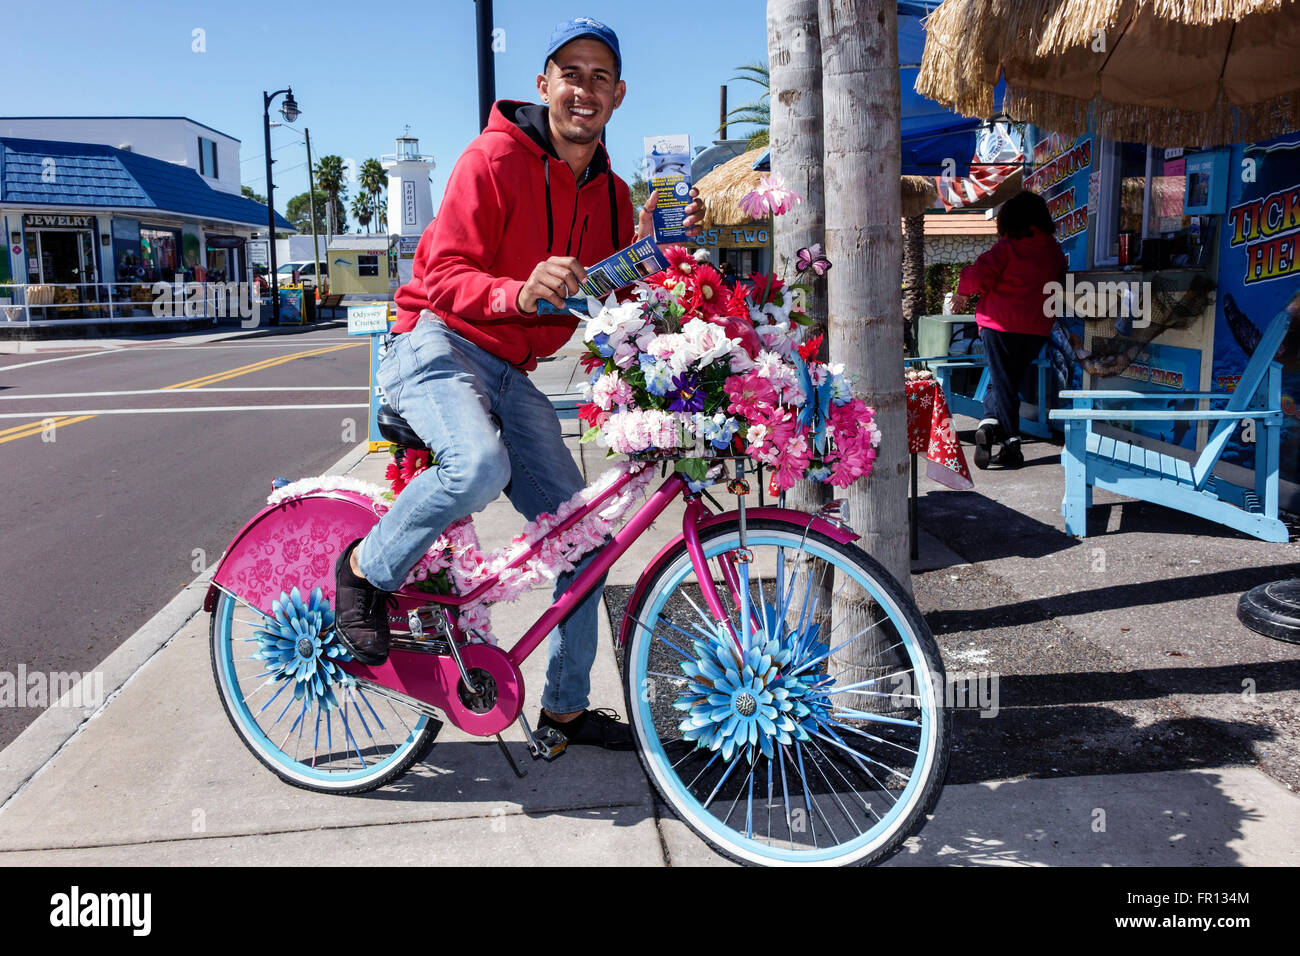 Florida Tarpon Springs,Dodecanese Boulevard,pink bicycle,bike,flowers,Hispanic adult,adults,man men male,handing out brochures,FL160212008 Stock Photo